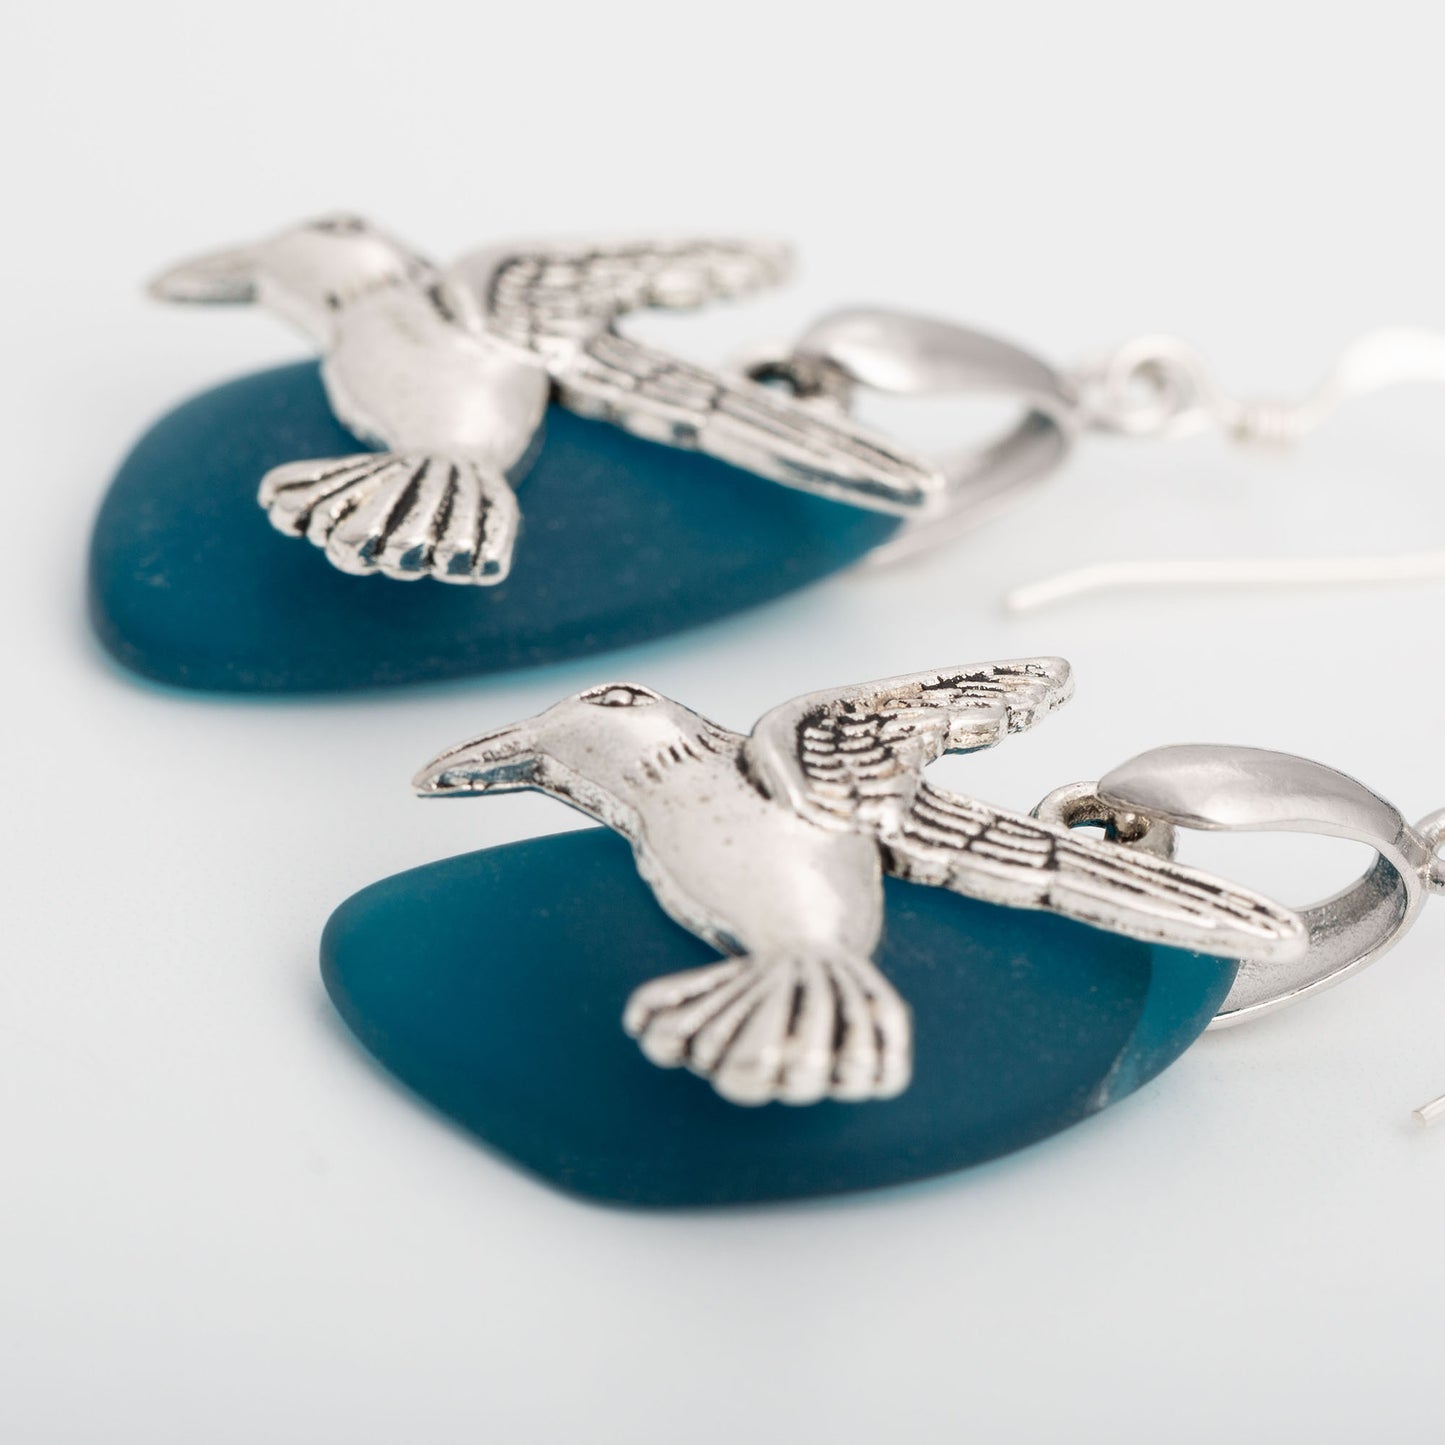 Hummingbird Sea Glass Earrings